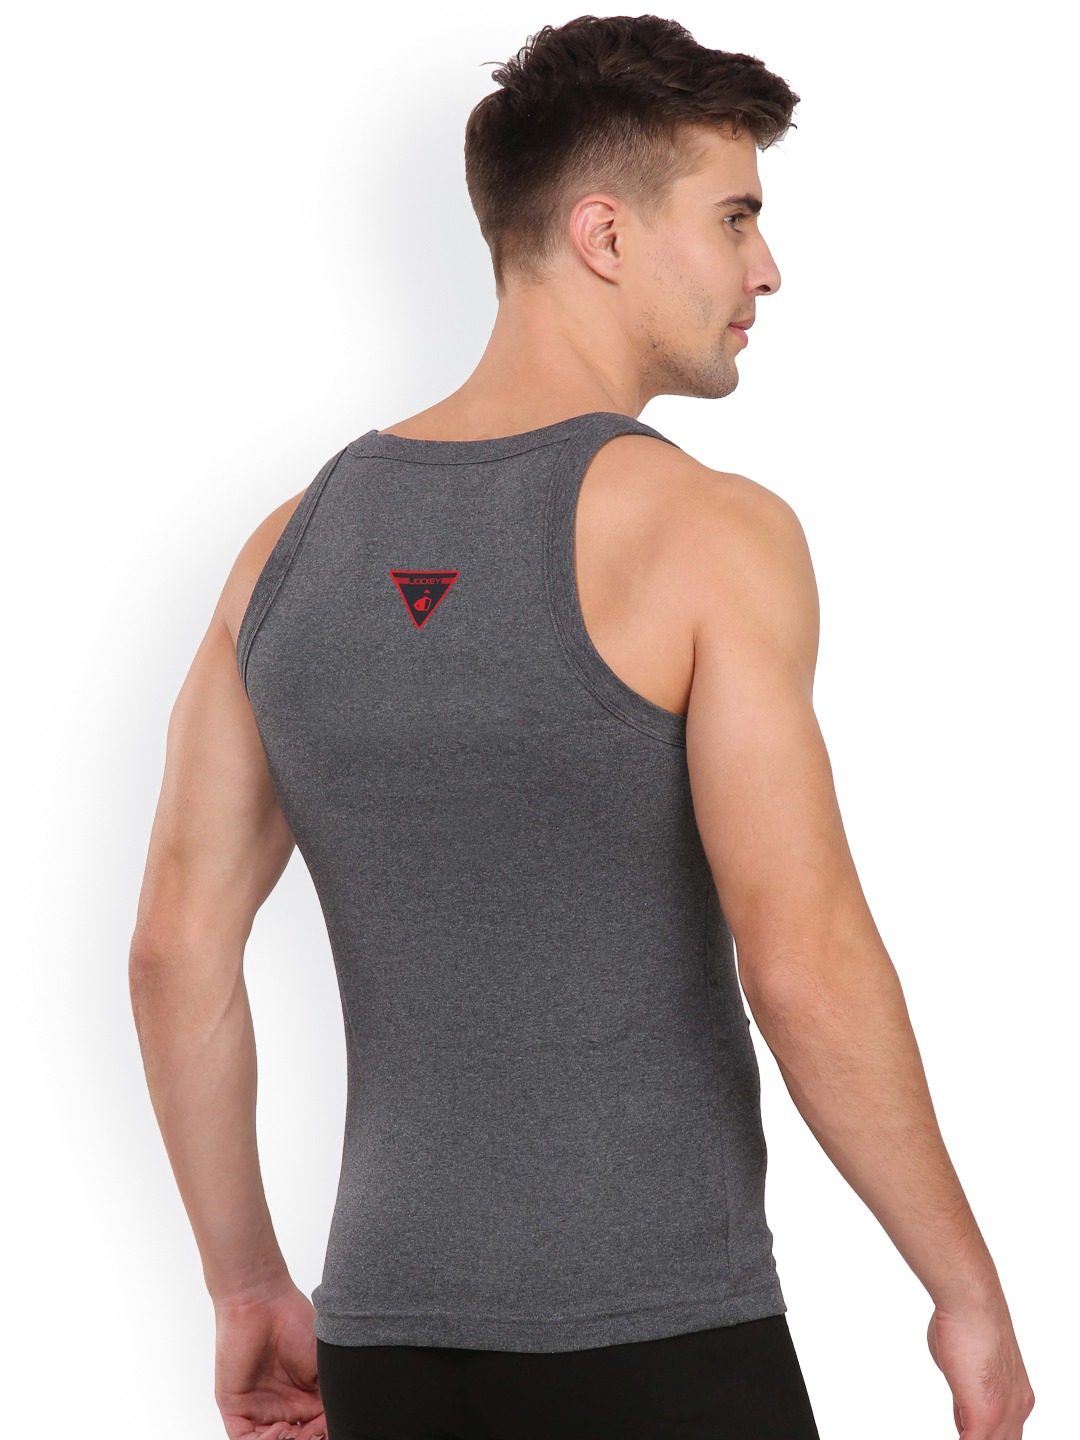 Clothing Innerwear Vests | Jockey Men Charcoal Grey Innerwear Vest US26-0105 - XC90745